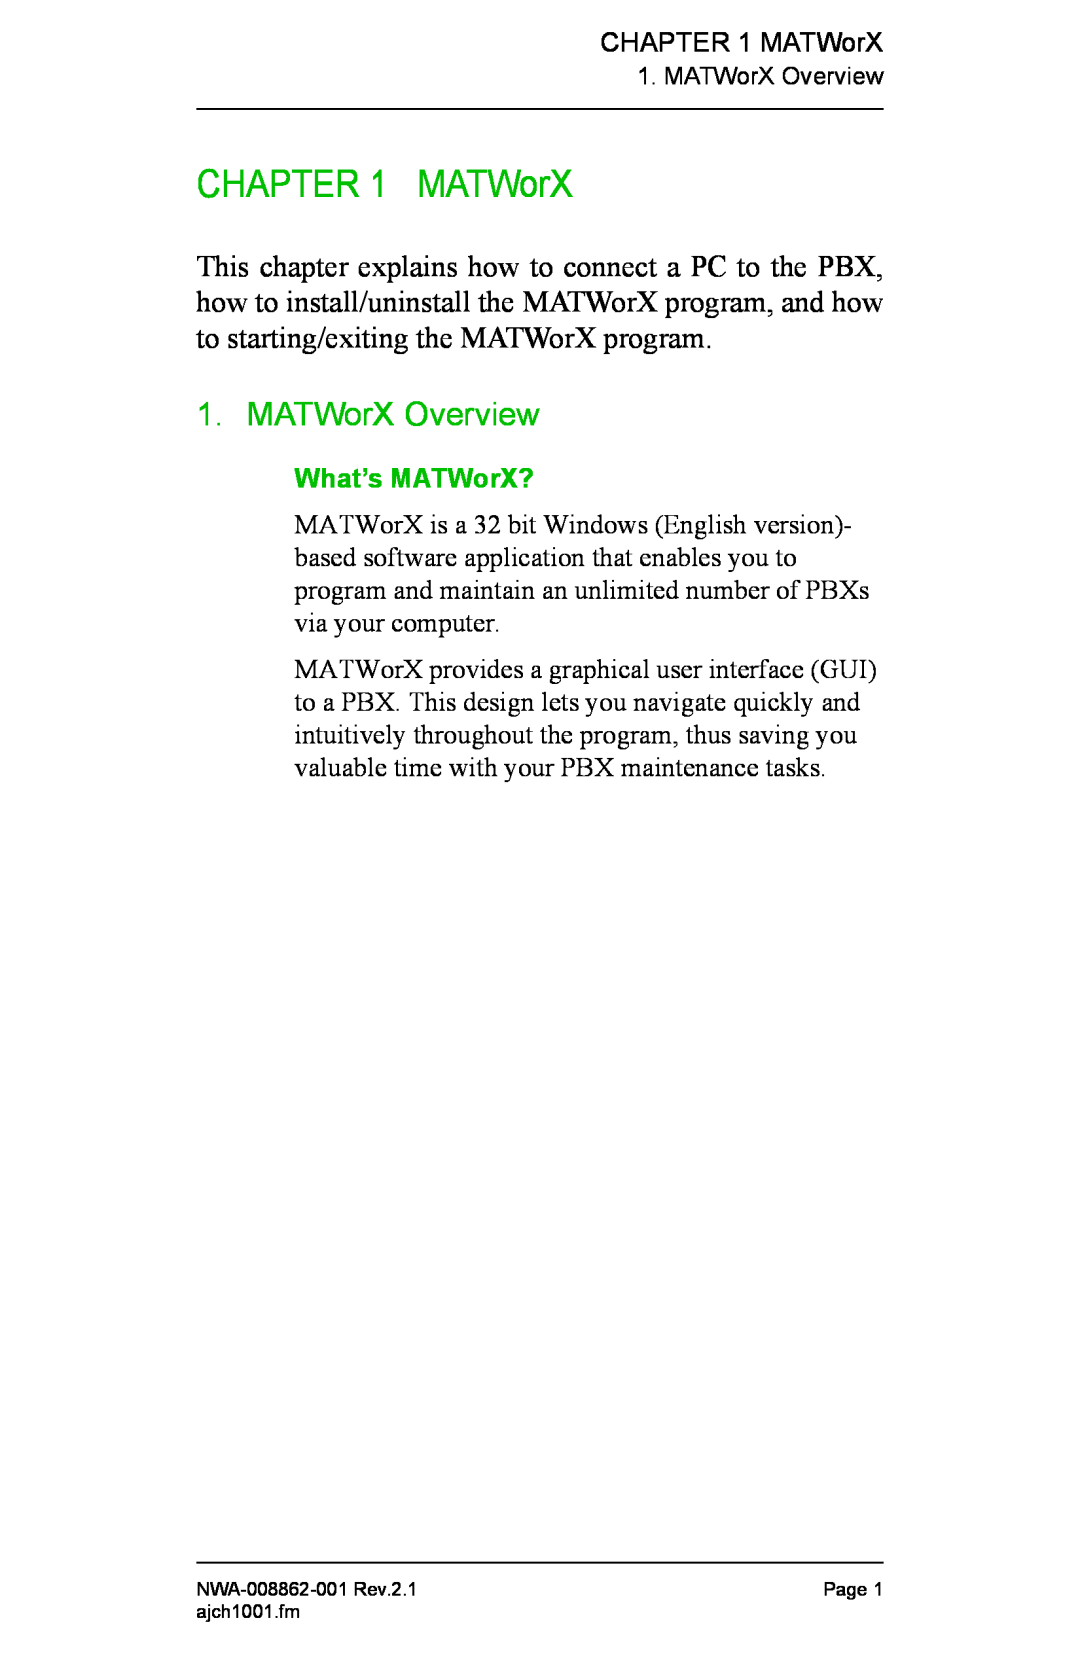 NEC NWA-008862-001 manual MATWorX Overview, What’s MATWorX? 